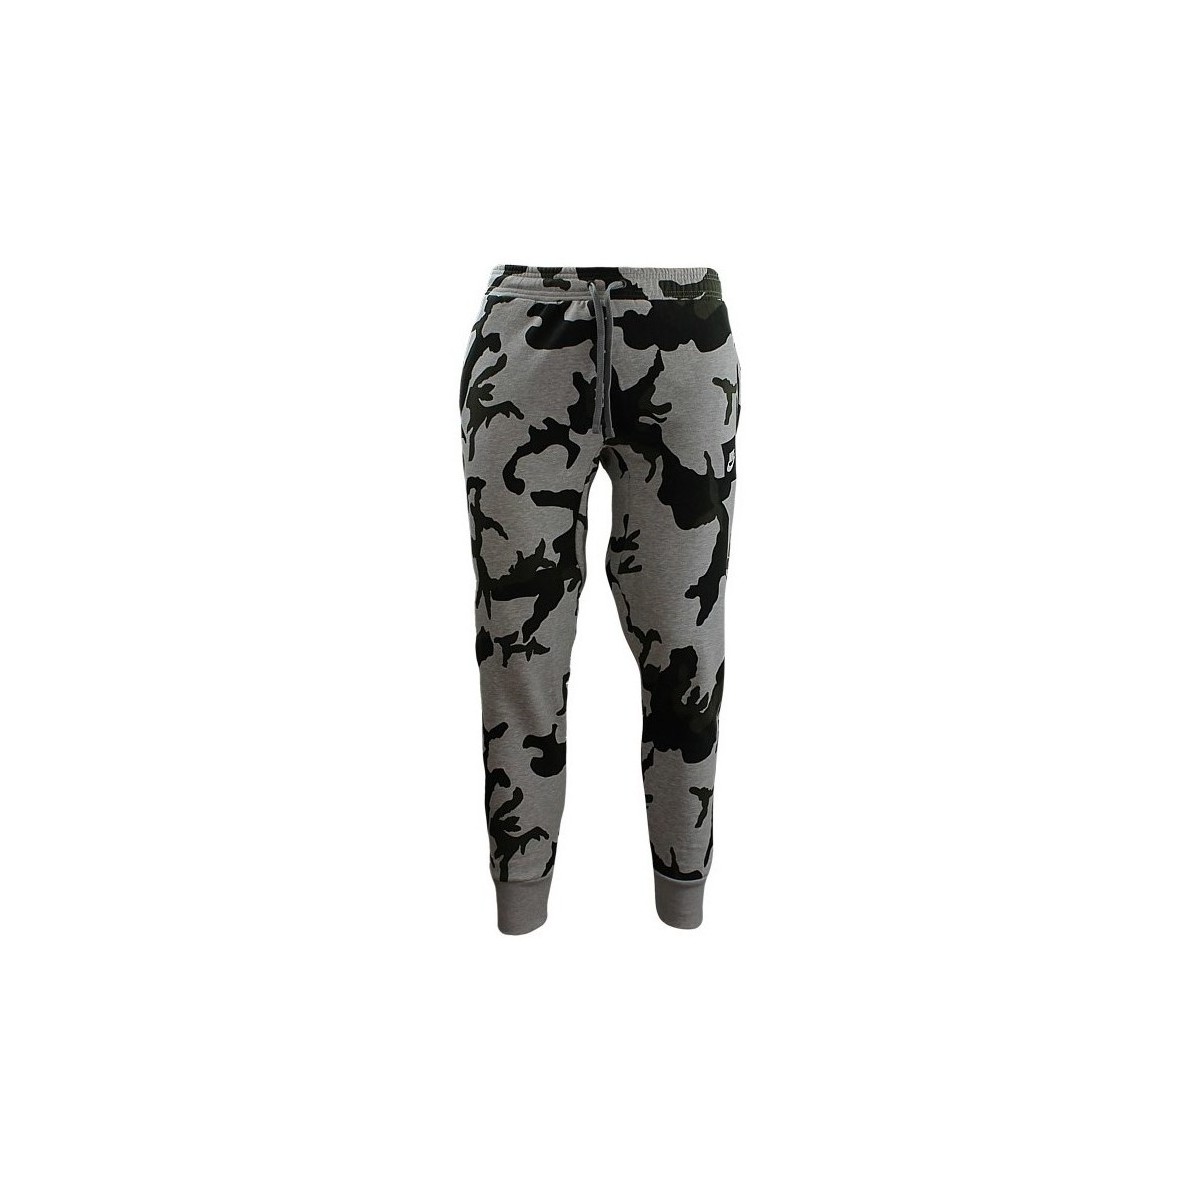 vaatteet Miehet Housut Nike Camouflage Jogginghose Mustat, Vihreät, Harmaat